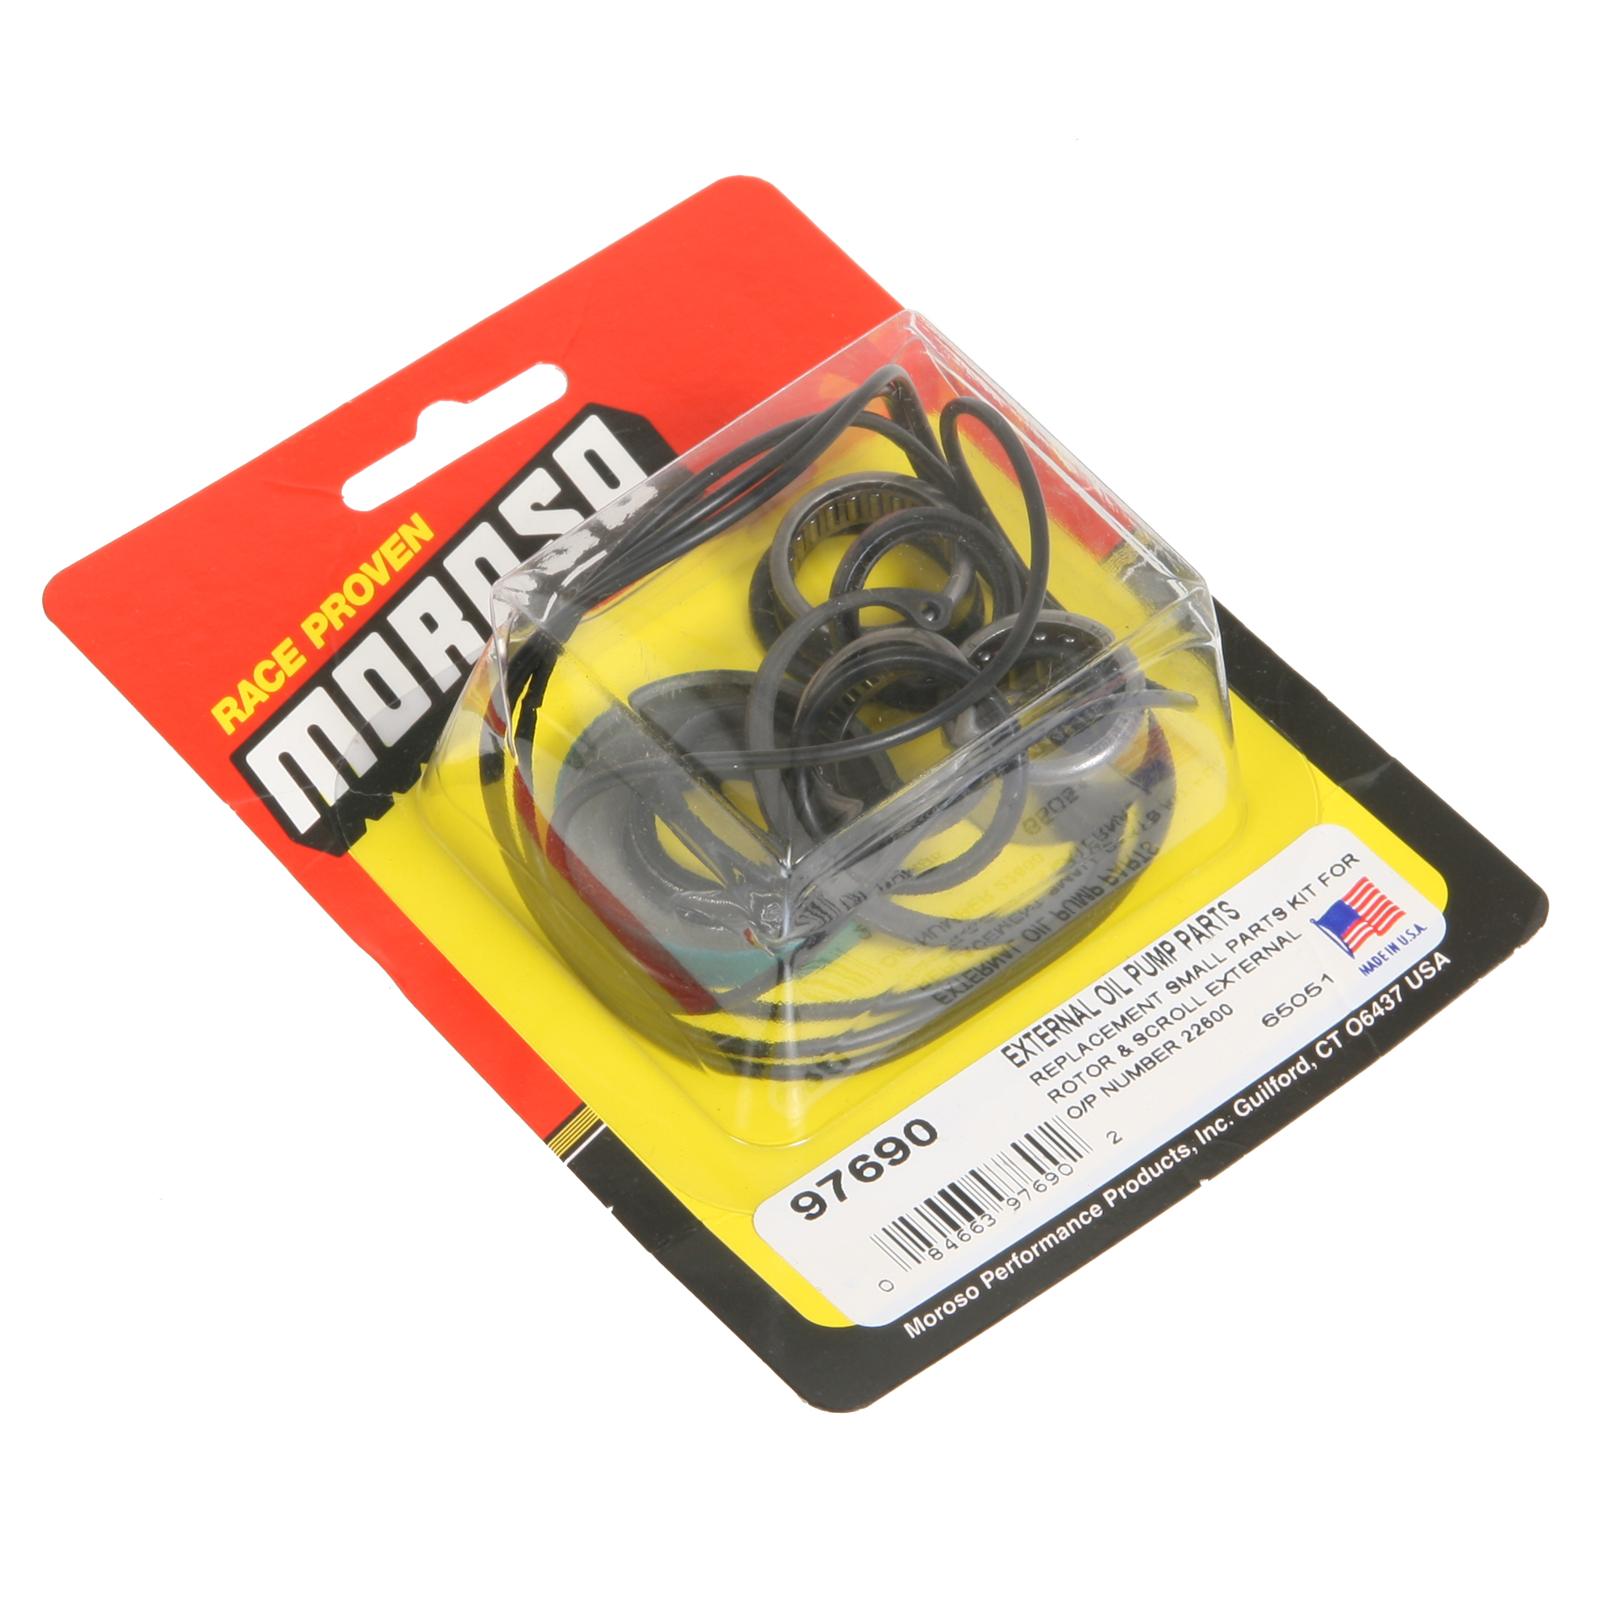 Moroso 97690 Small Parts Kit (For PN: 22600)